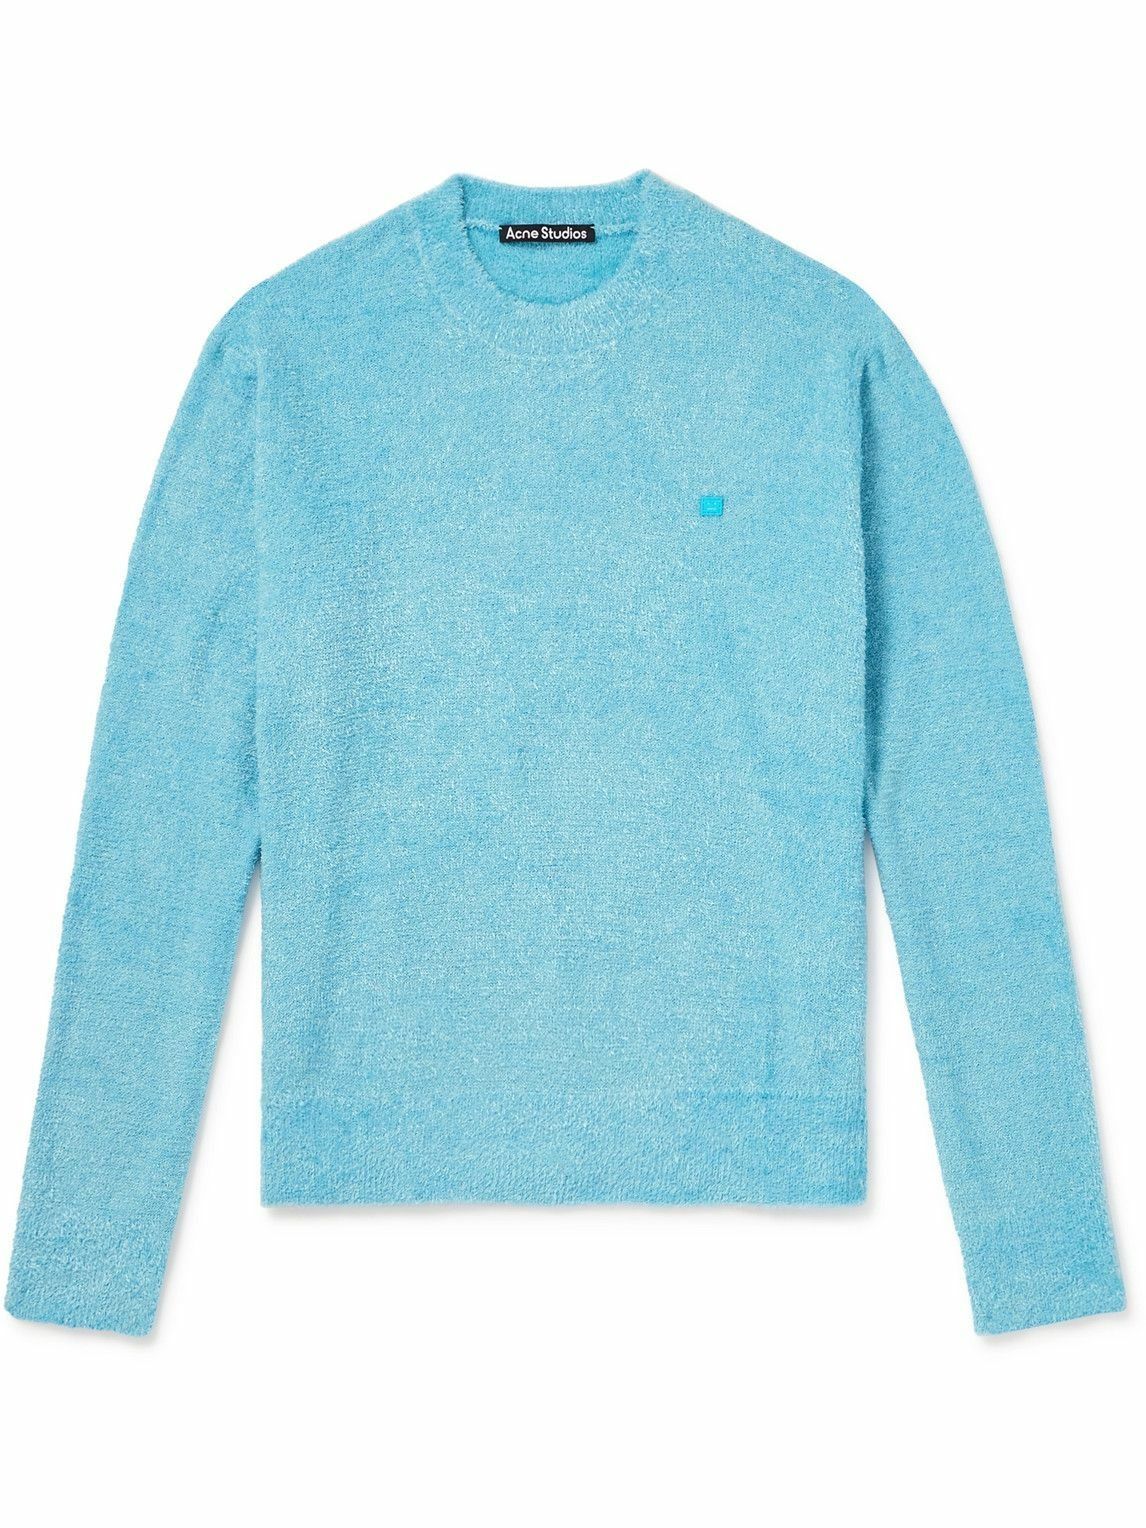 Acne Studios - Kedgar Logo-Appliquéd Knitted Sweater - Blue Acne Studios